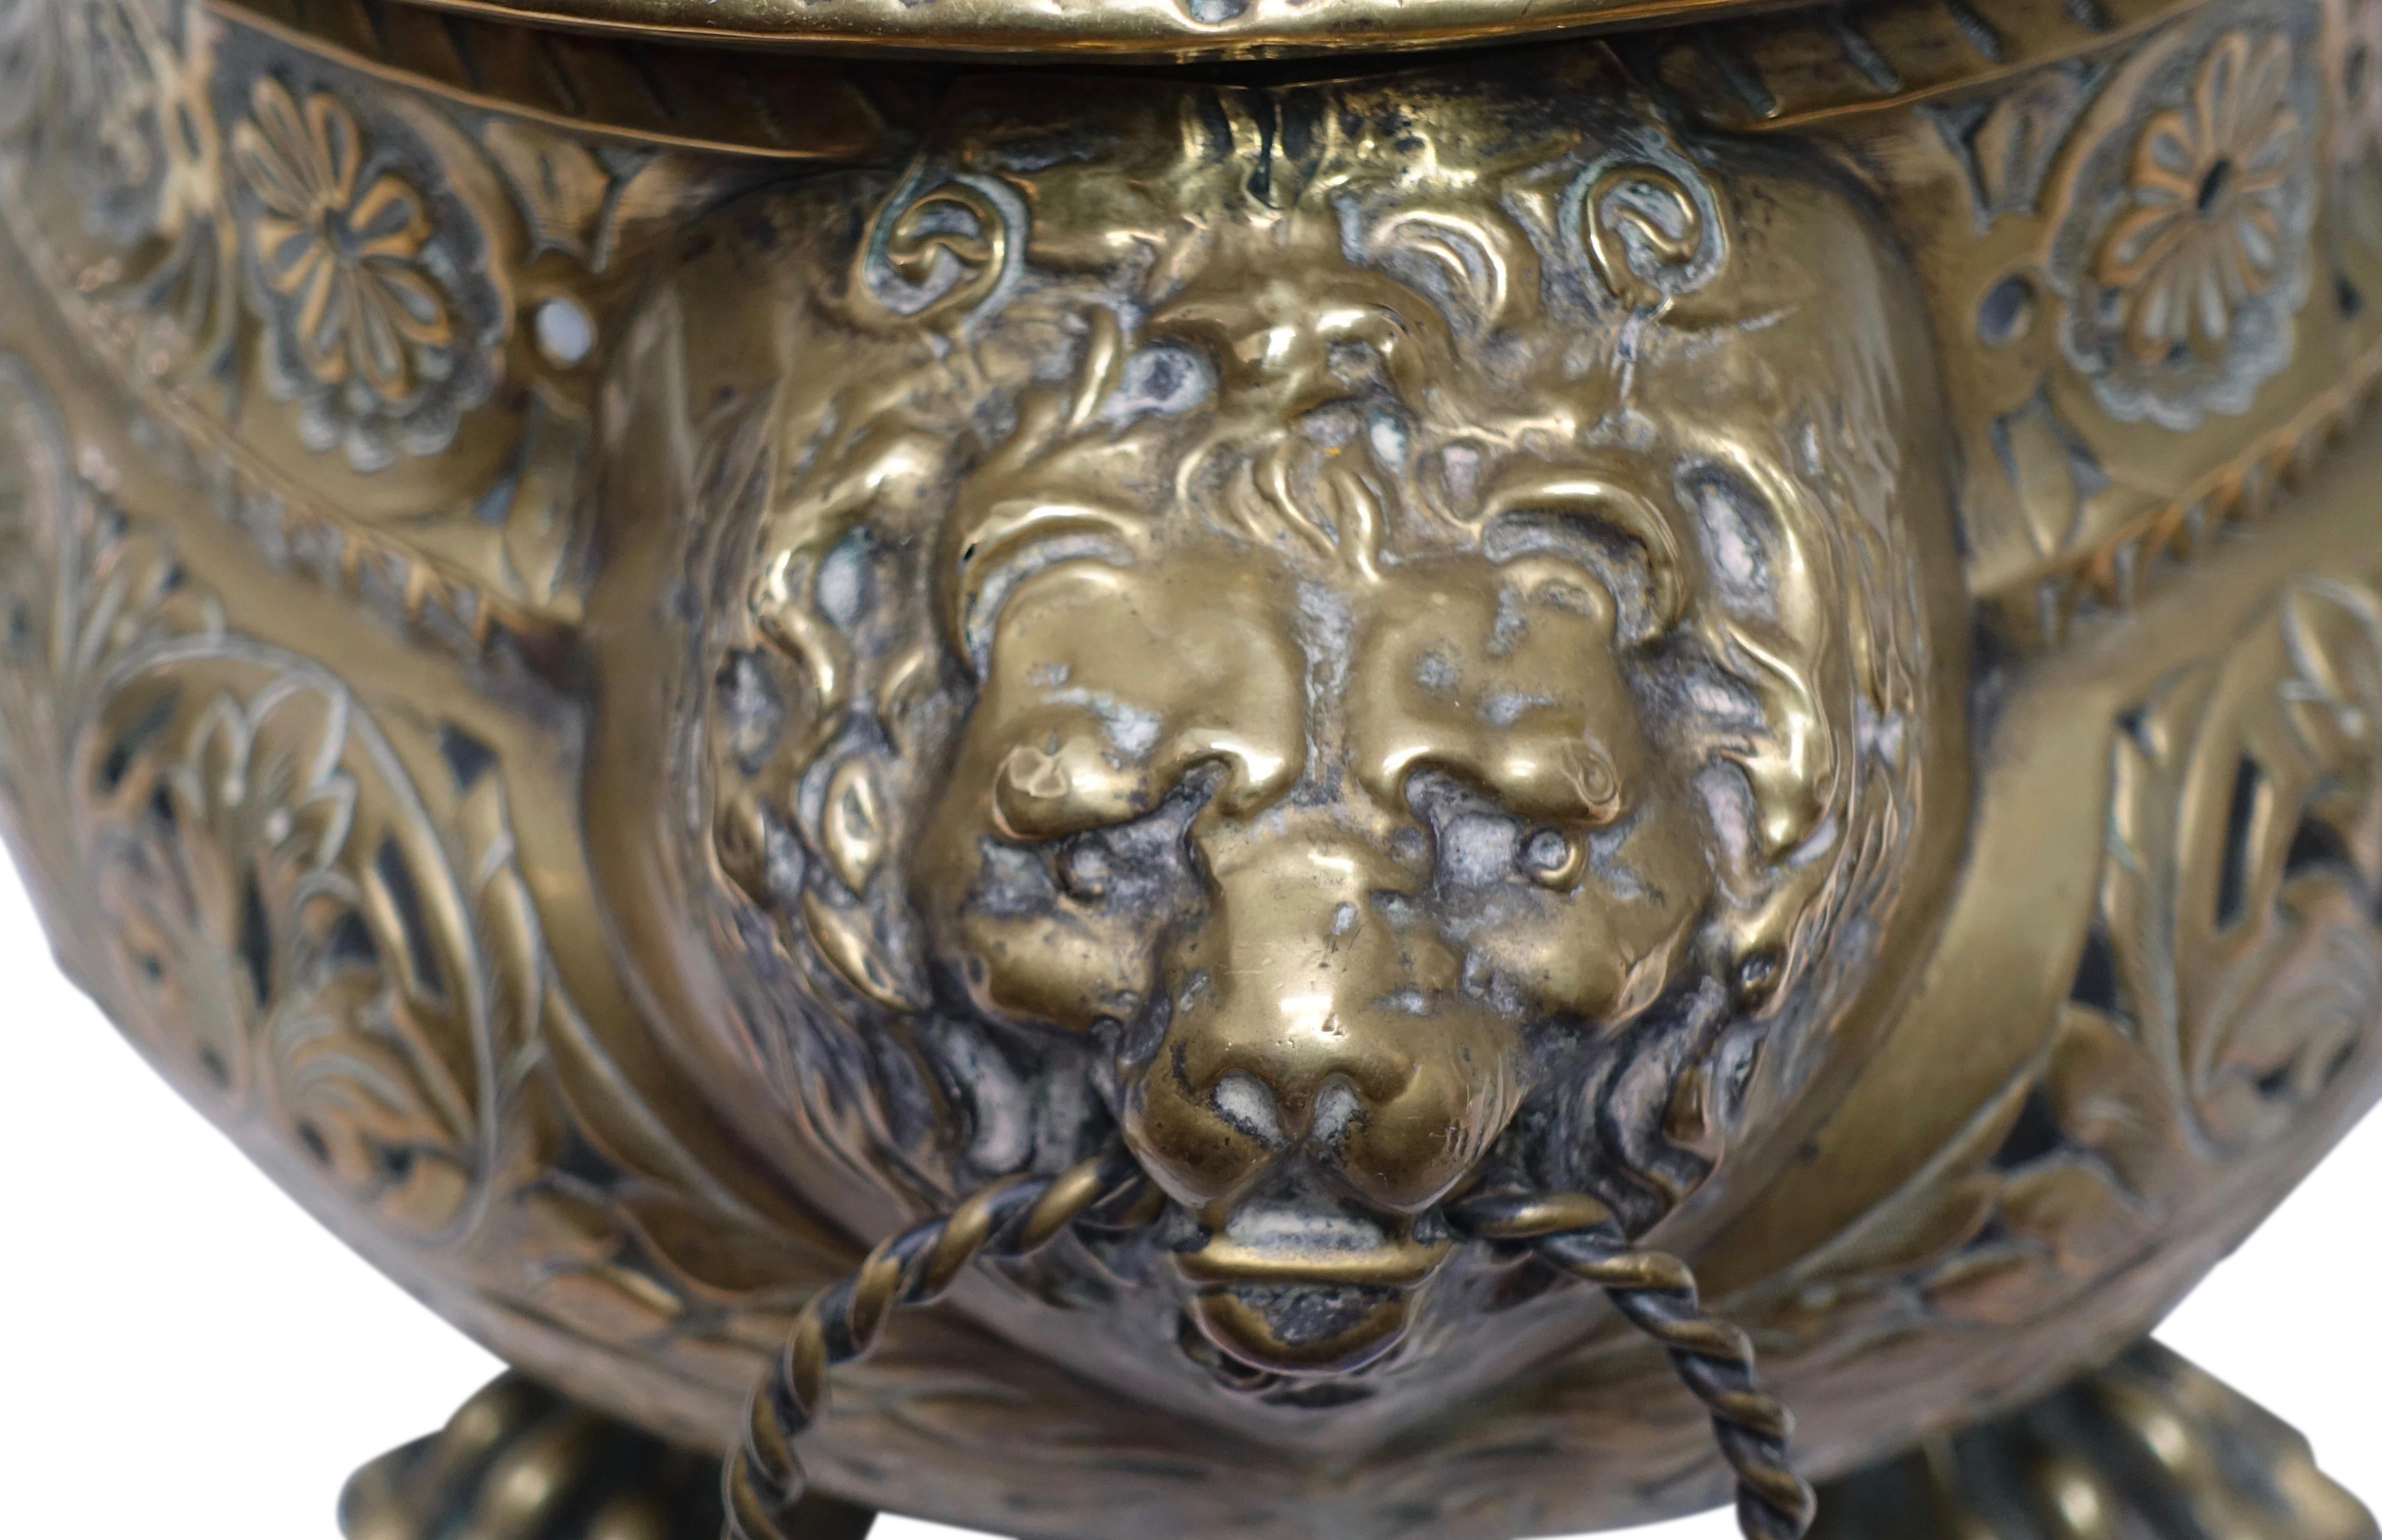 19th Century Repousse Brass Jardinière with Lion Head Handles, English, circa 1800